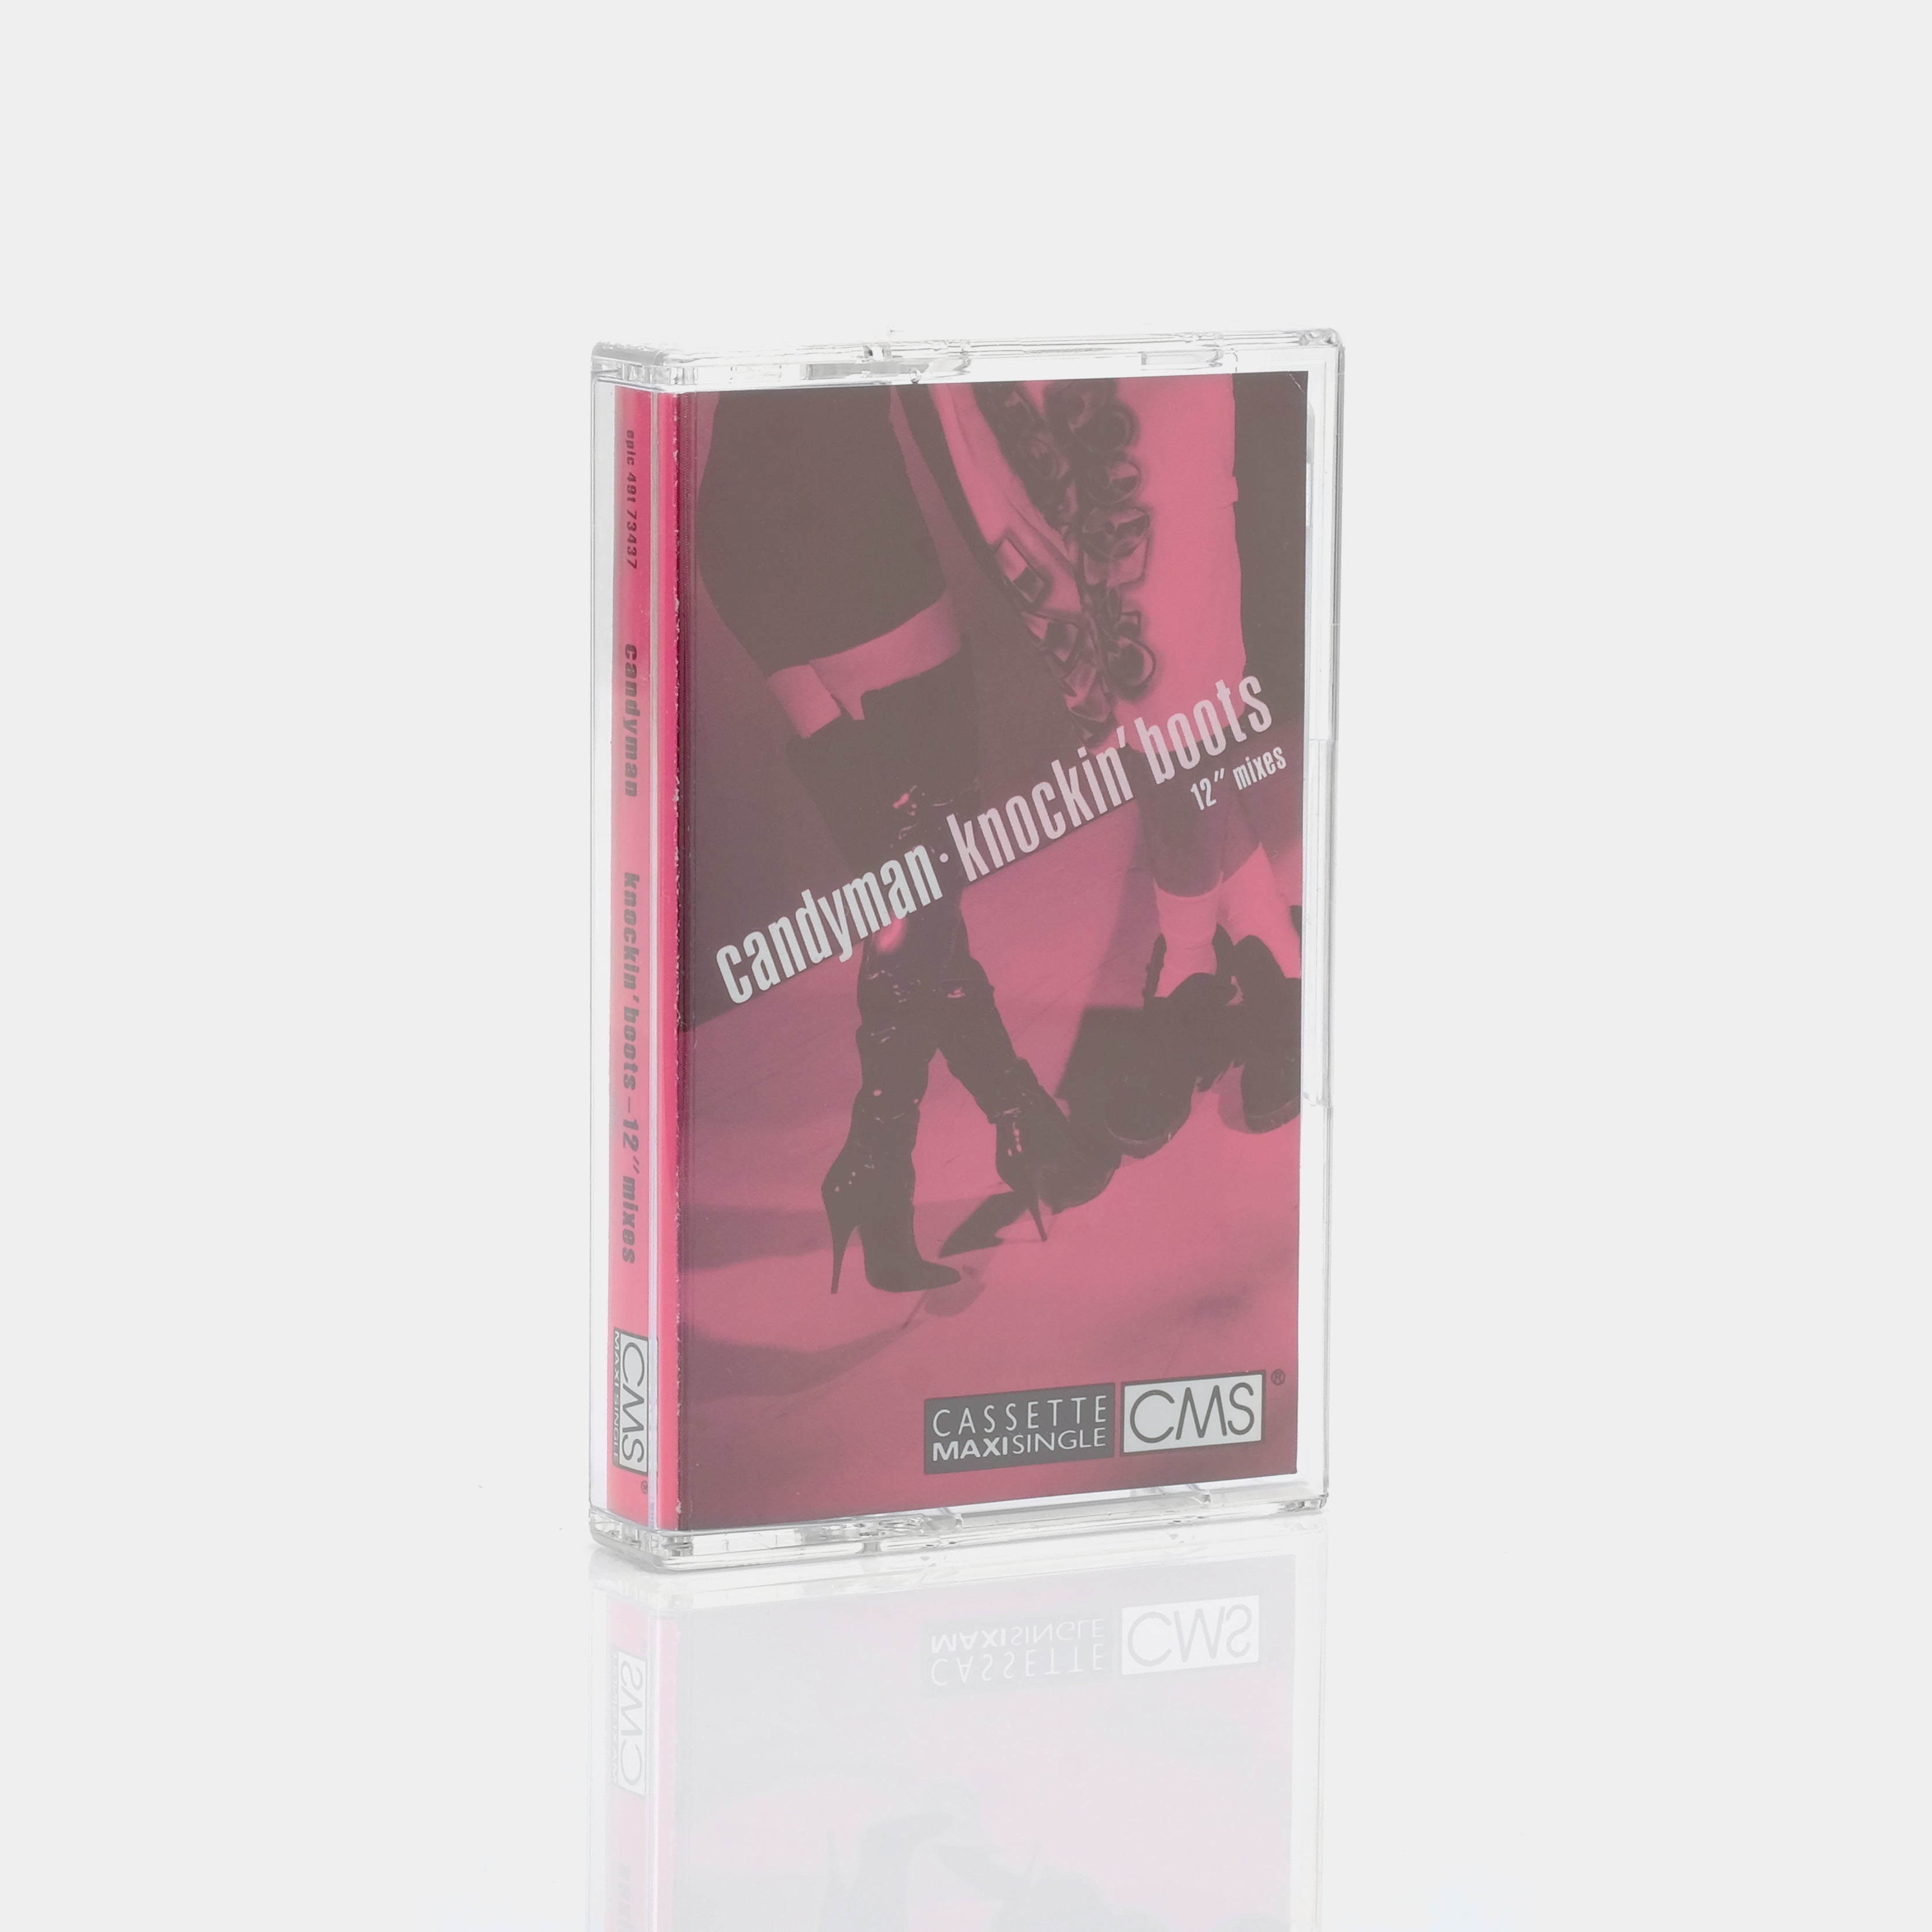 Candyman - Knockin' Boots Cassette Tape